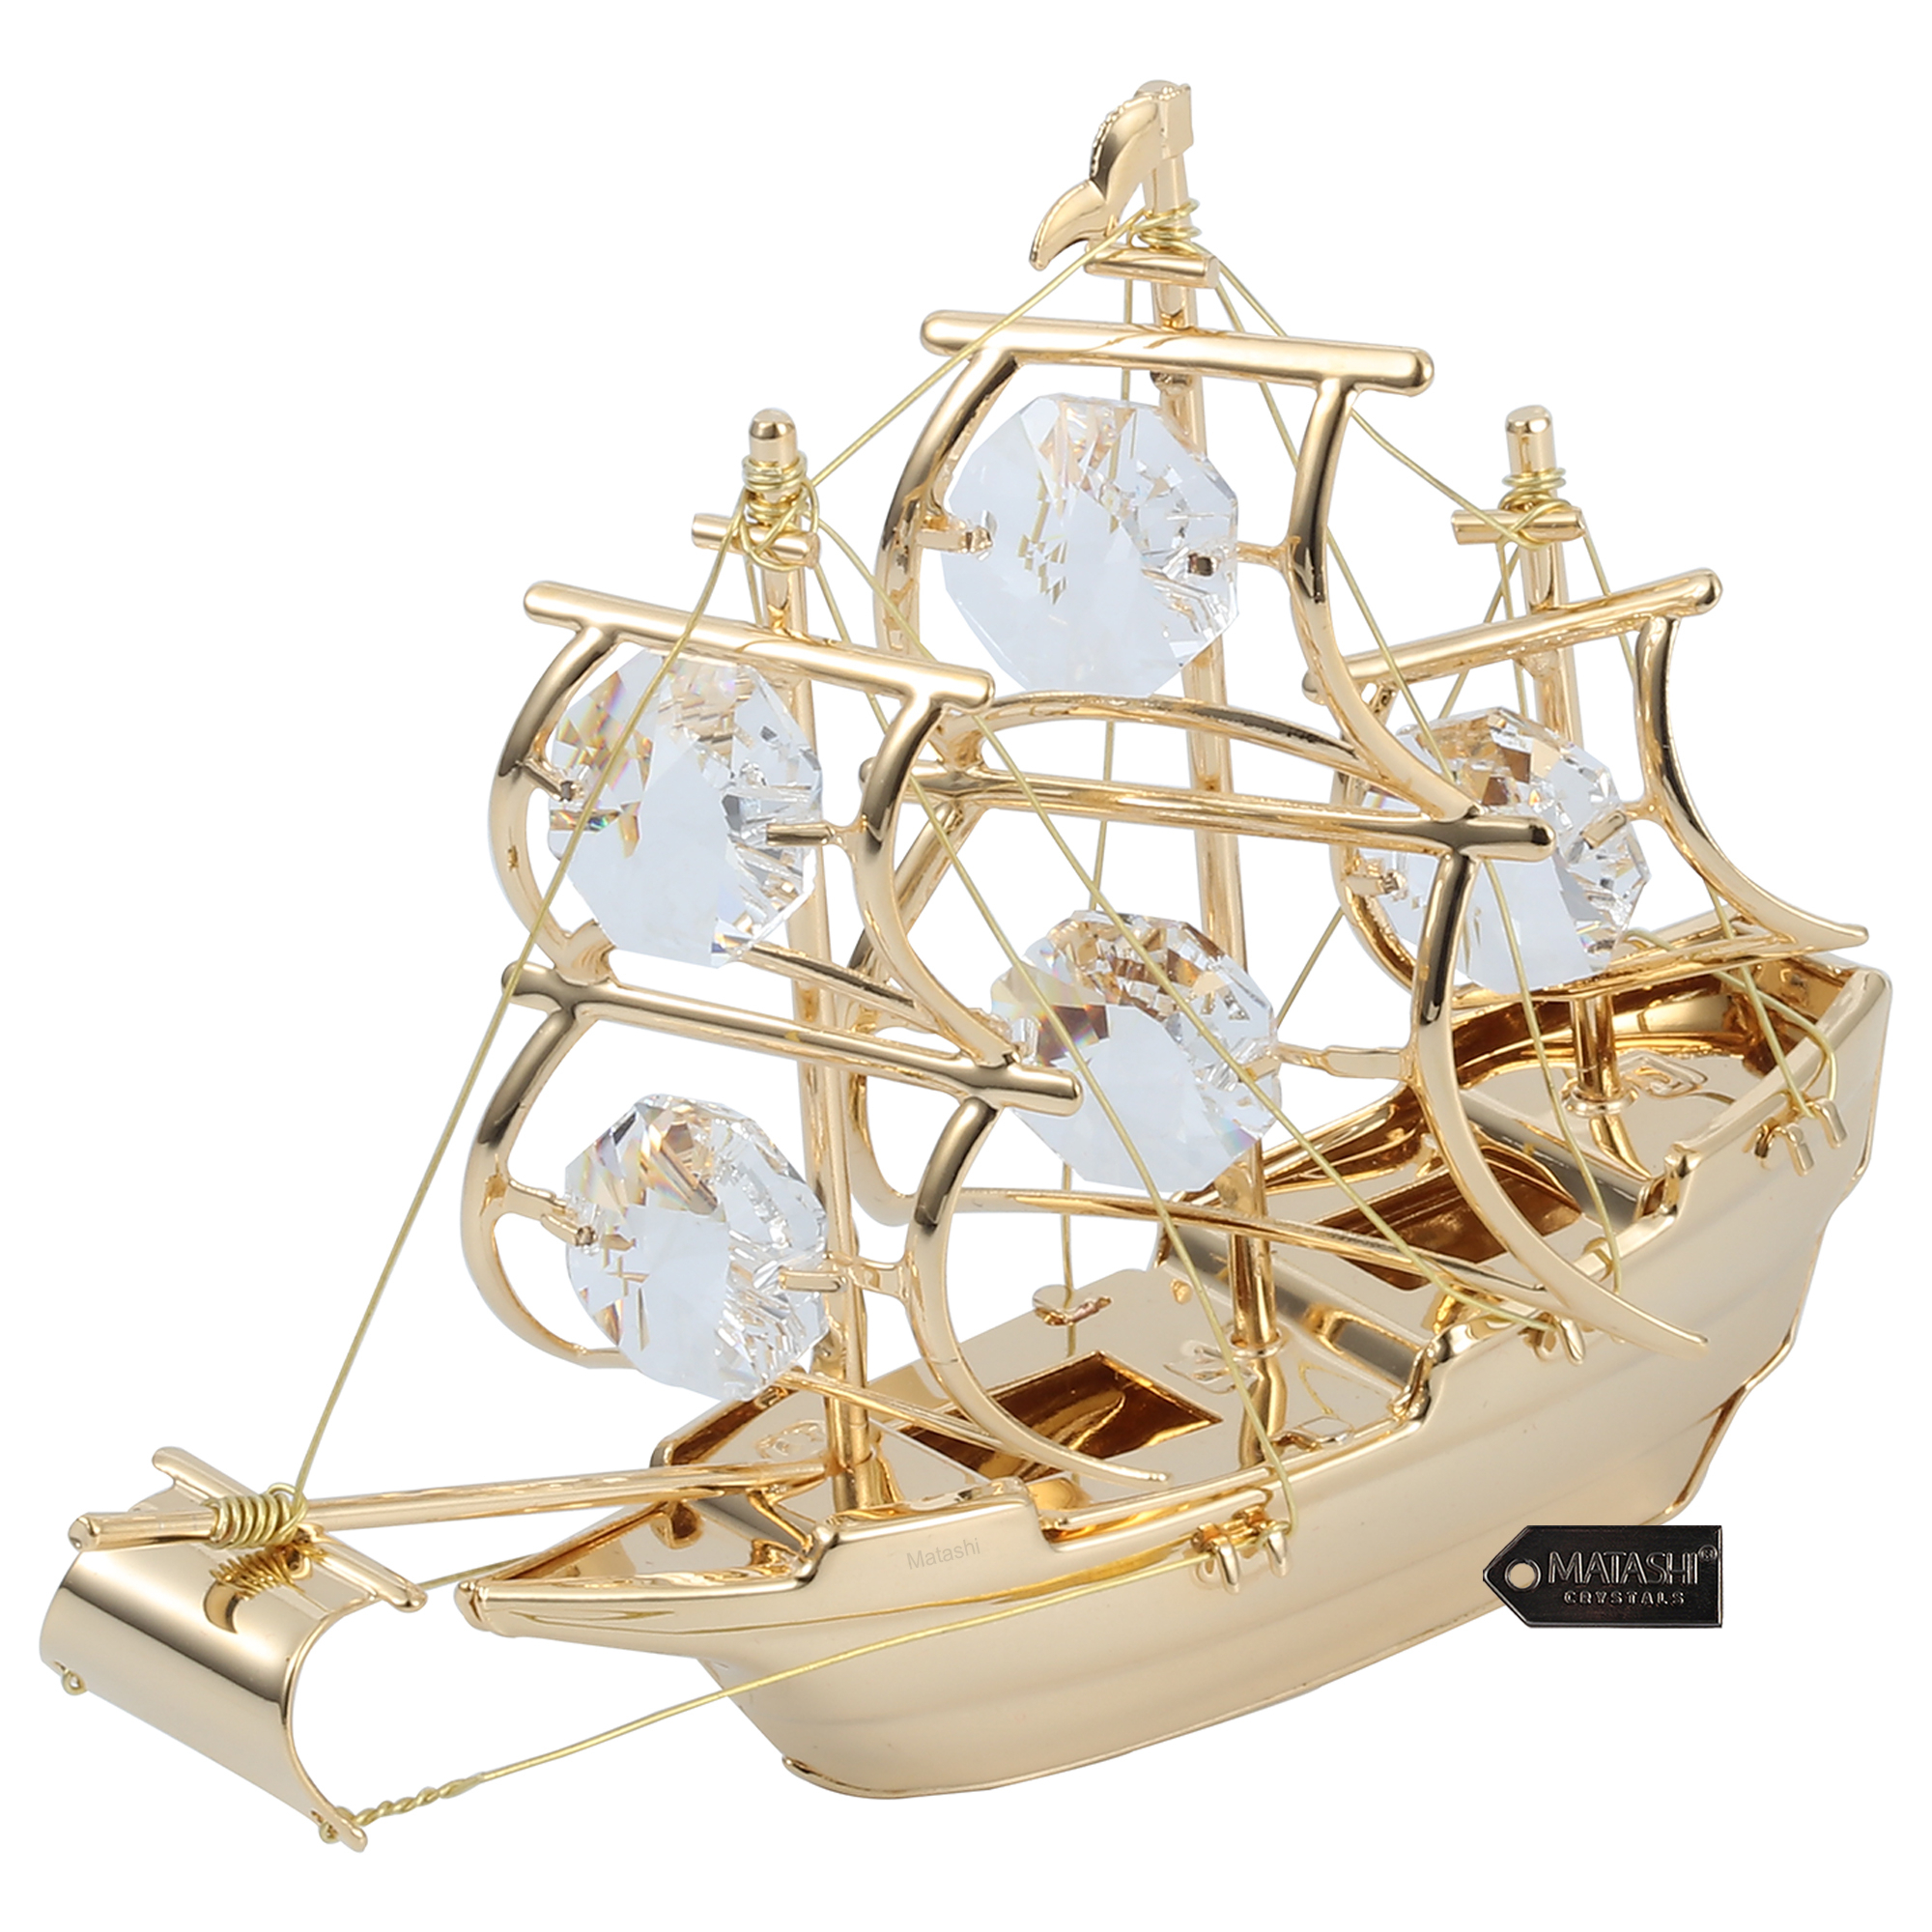 Matashi 24K Gold Plated Clear Crystal Studded Mayflower Sailing Ship Ornament